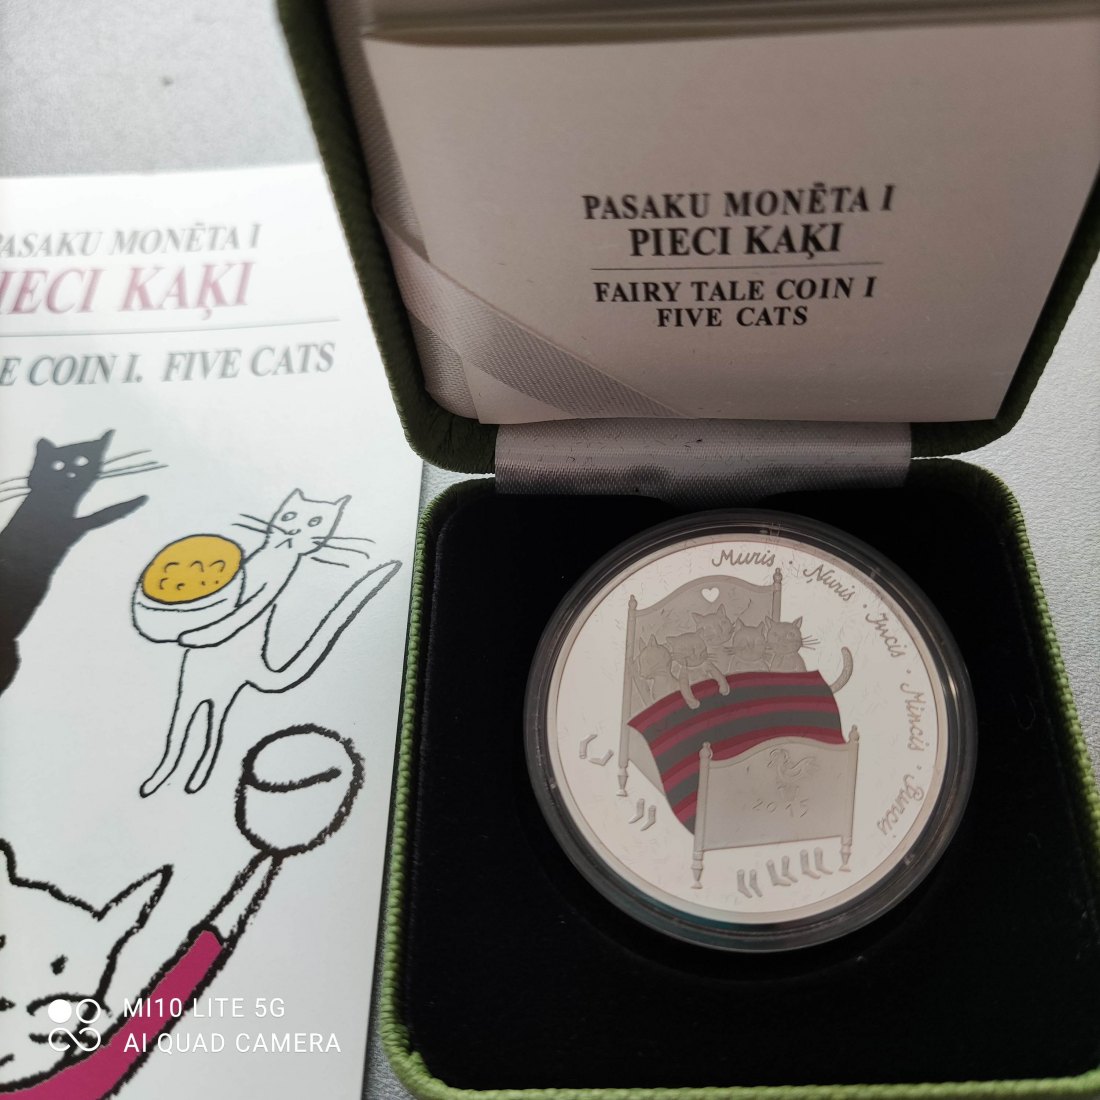  Lettland 5 Euro Silber 2015 Fairy Tale Coin I Märchen-Münze I  5 Cats proof/pp   